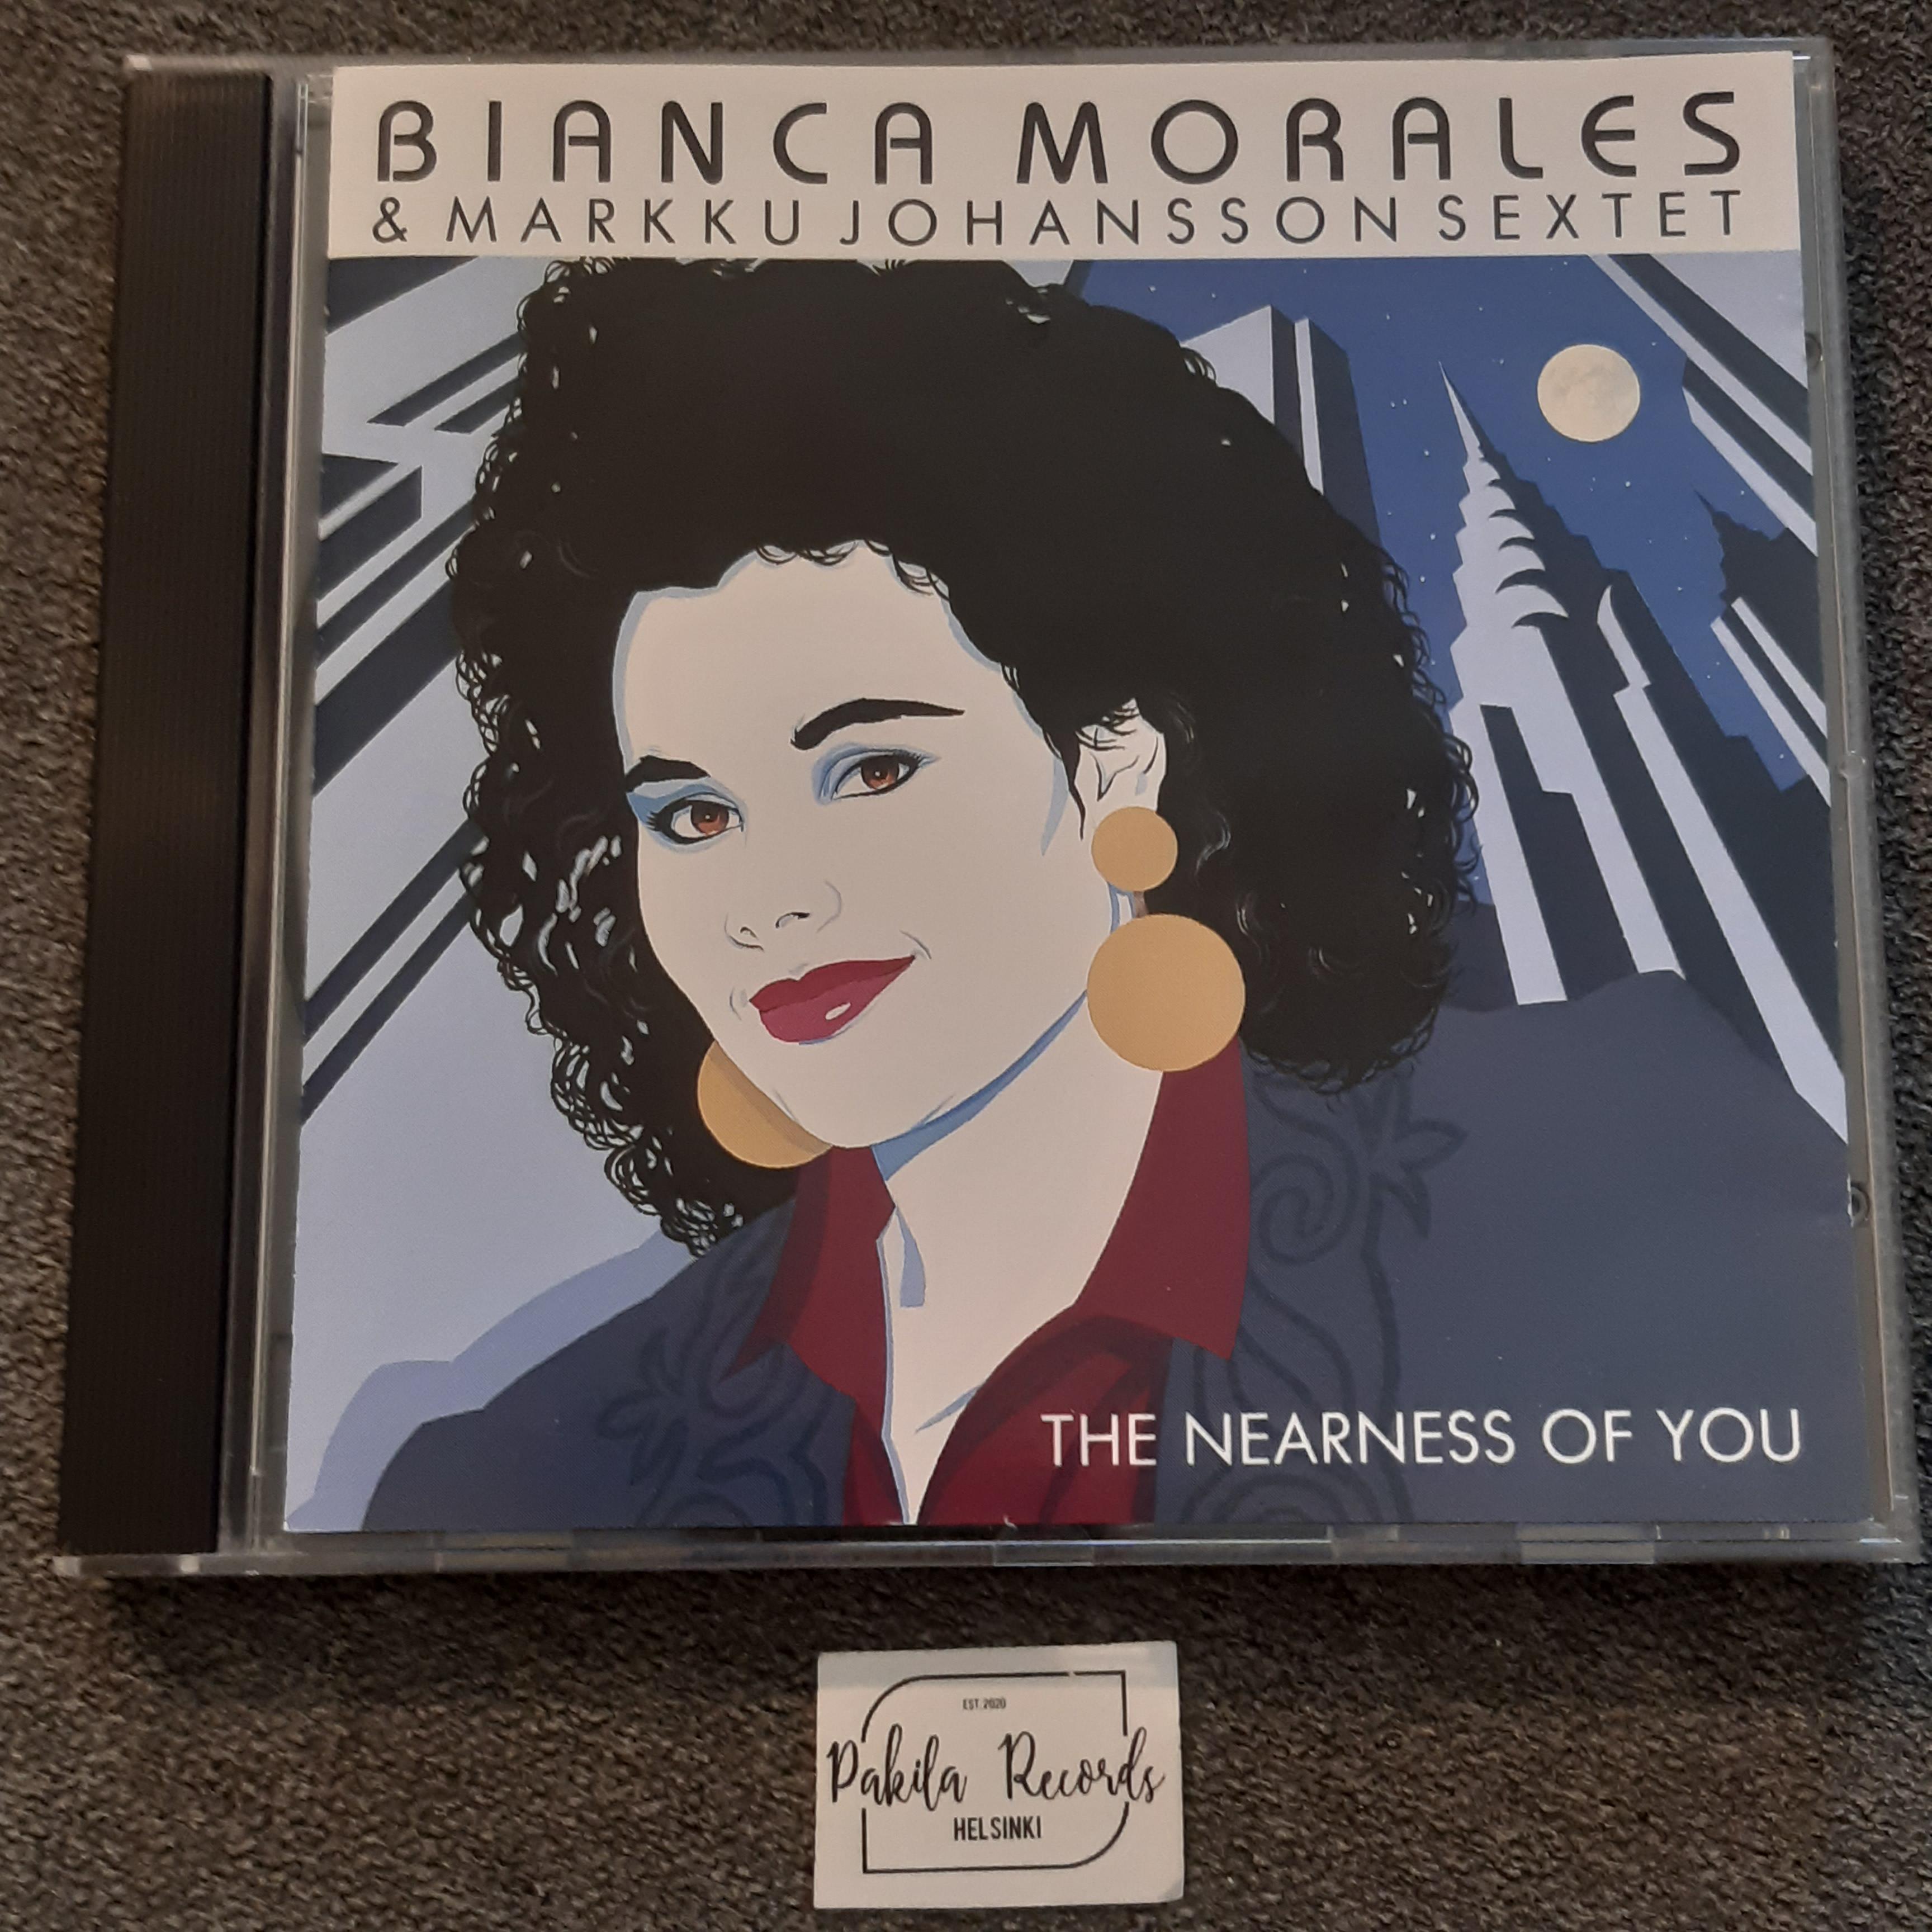 Bianca Morales & Markku Johansson Sextet - The Nearness Of You - CD (käytetty)